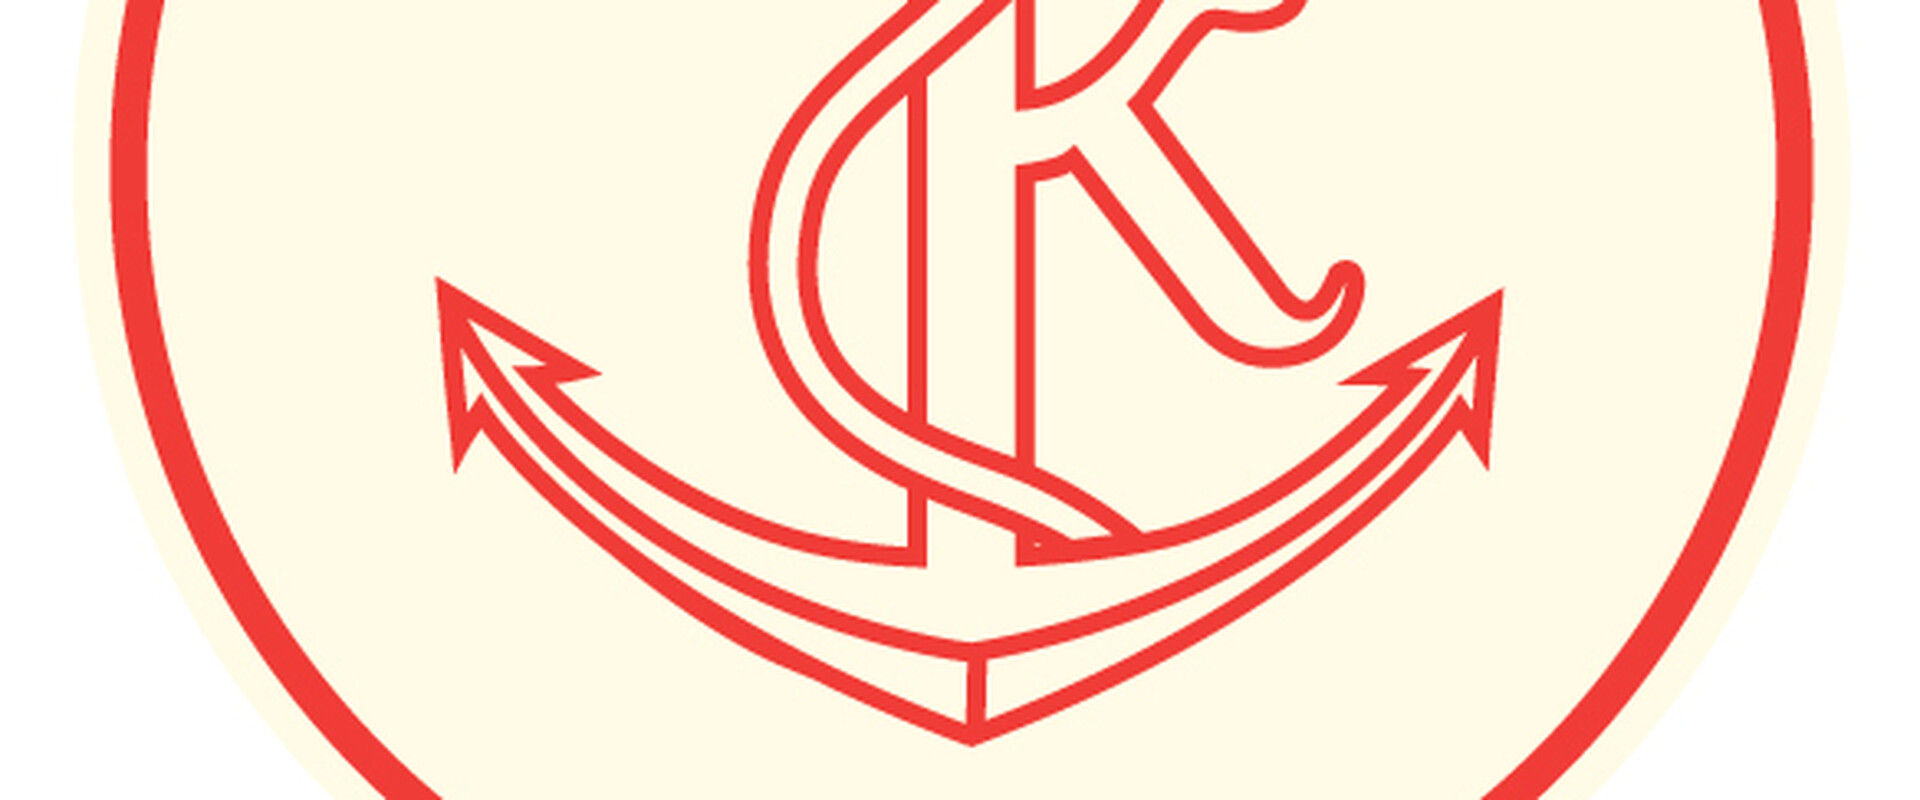 Kristiinankaupunki logo pun nega rgb4